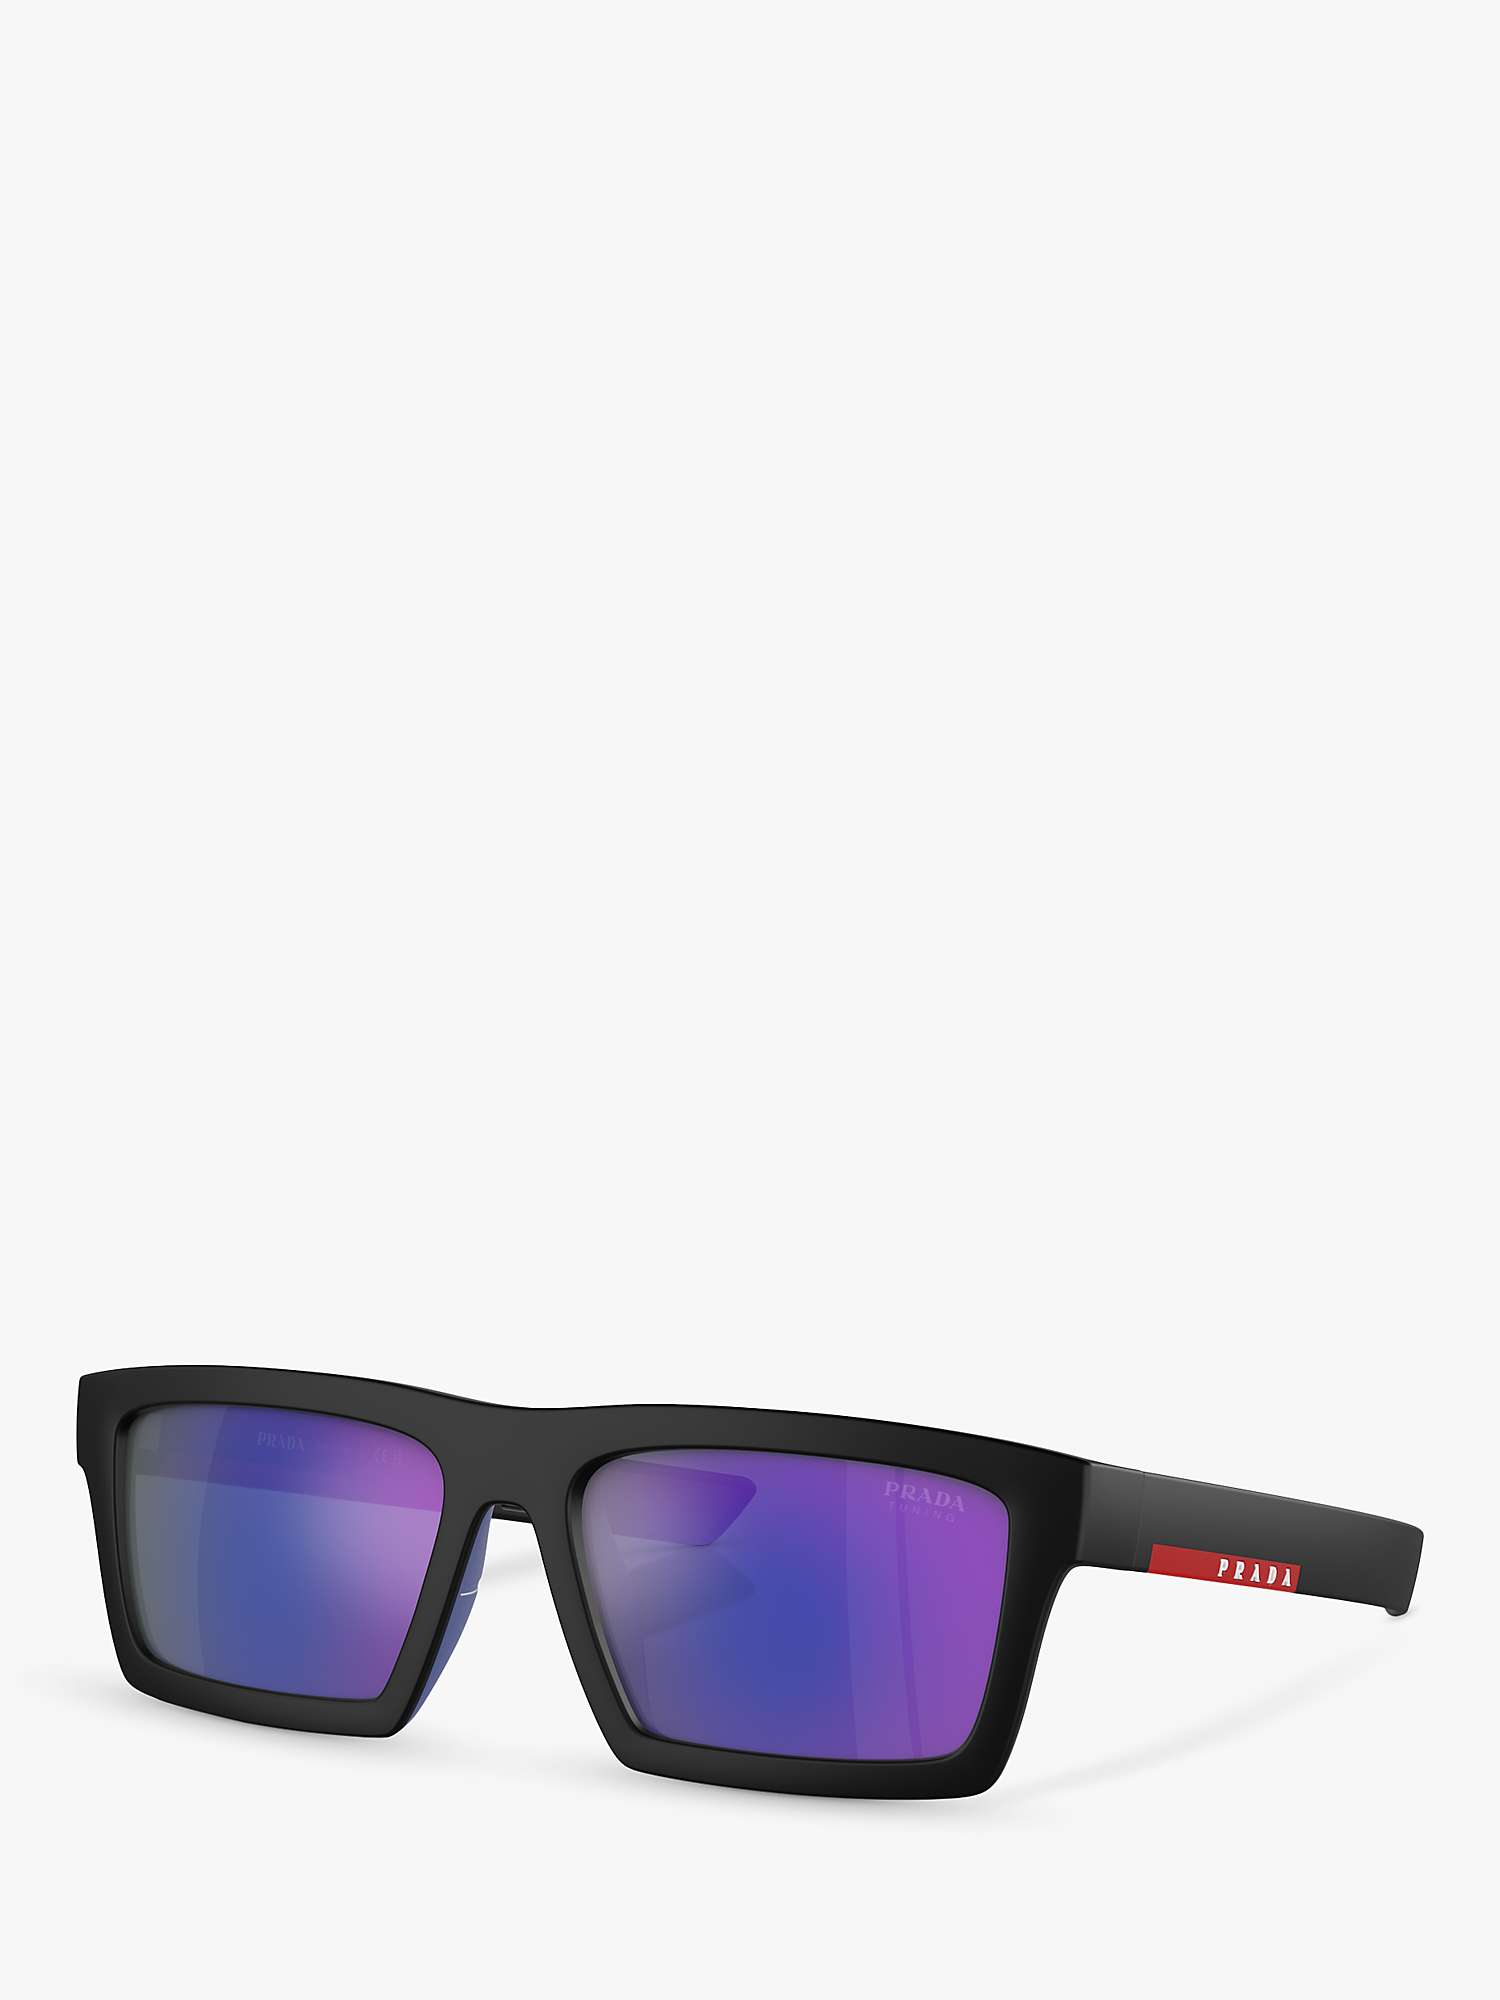 Buy Prada PS 02ZS Men's Rectangular Sunglasses, Matte Black/Mirror Purple Online at johnlewis.com